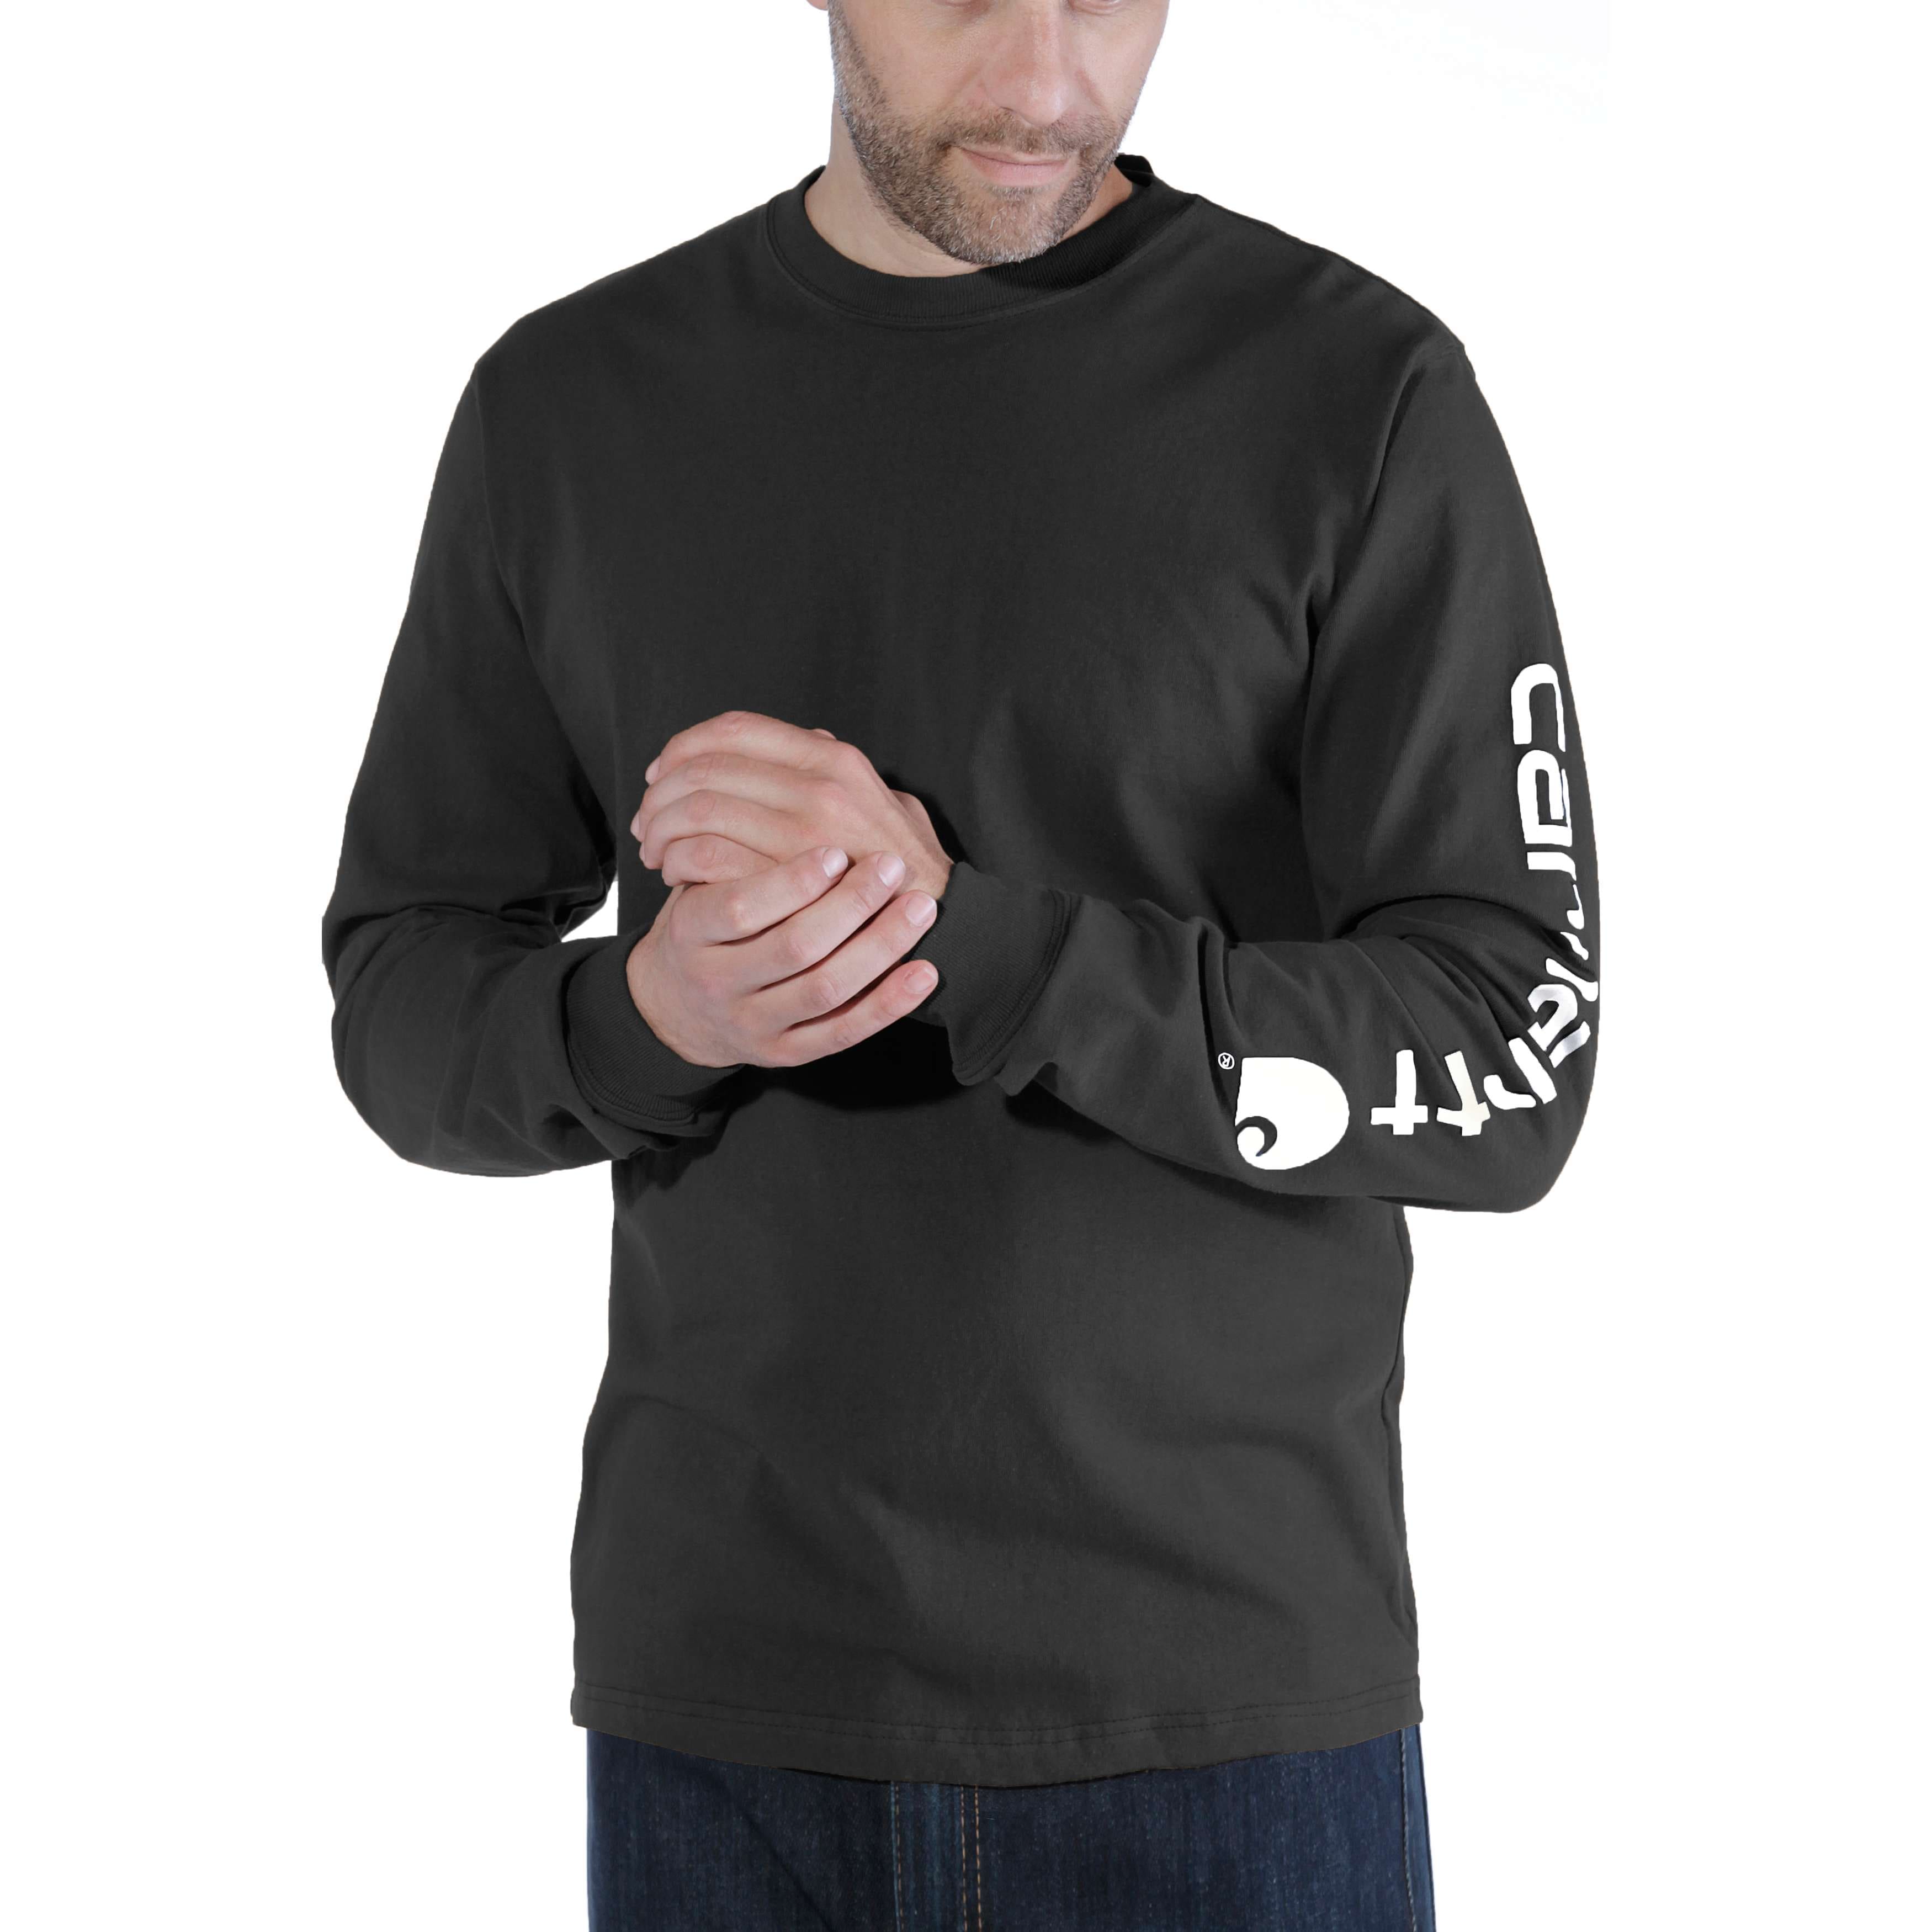 Carhartt Shirts: Men's K228 BLK Black Heavyweight Cotton Long-Sleeve  Thermal Shirt